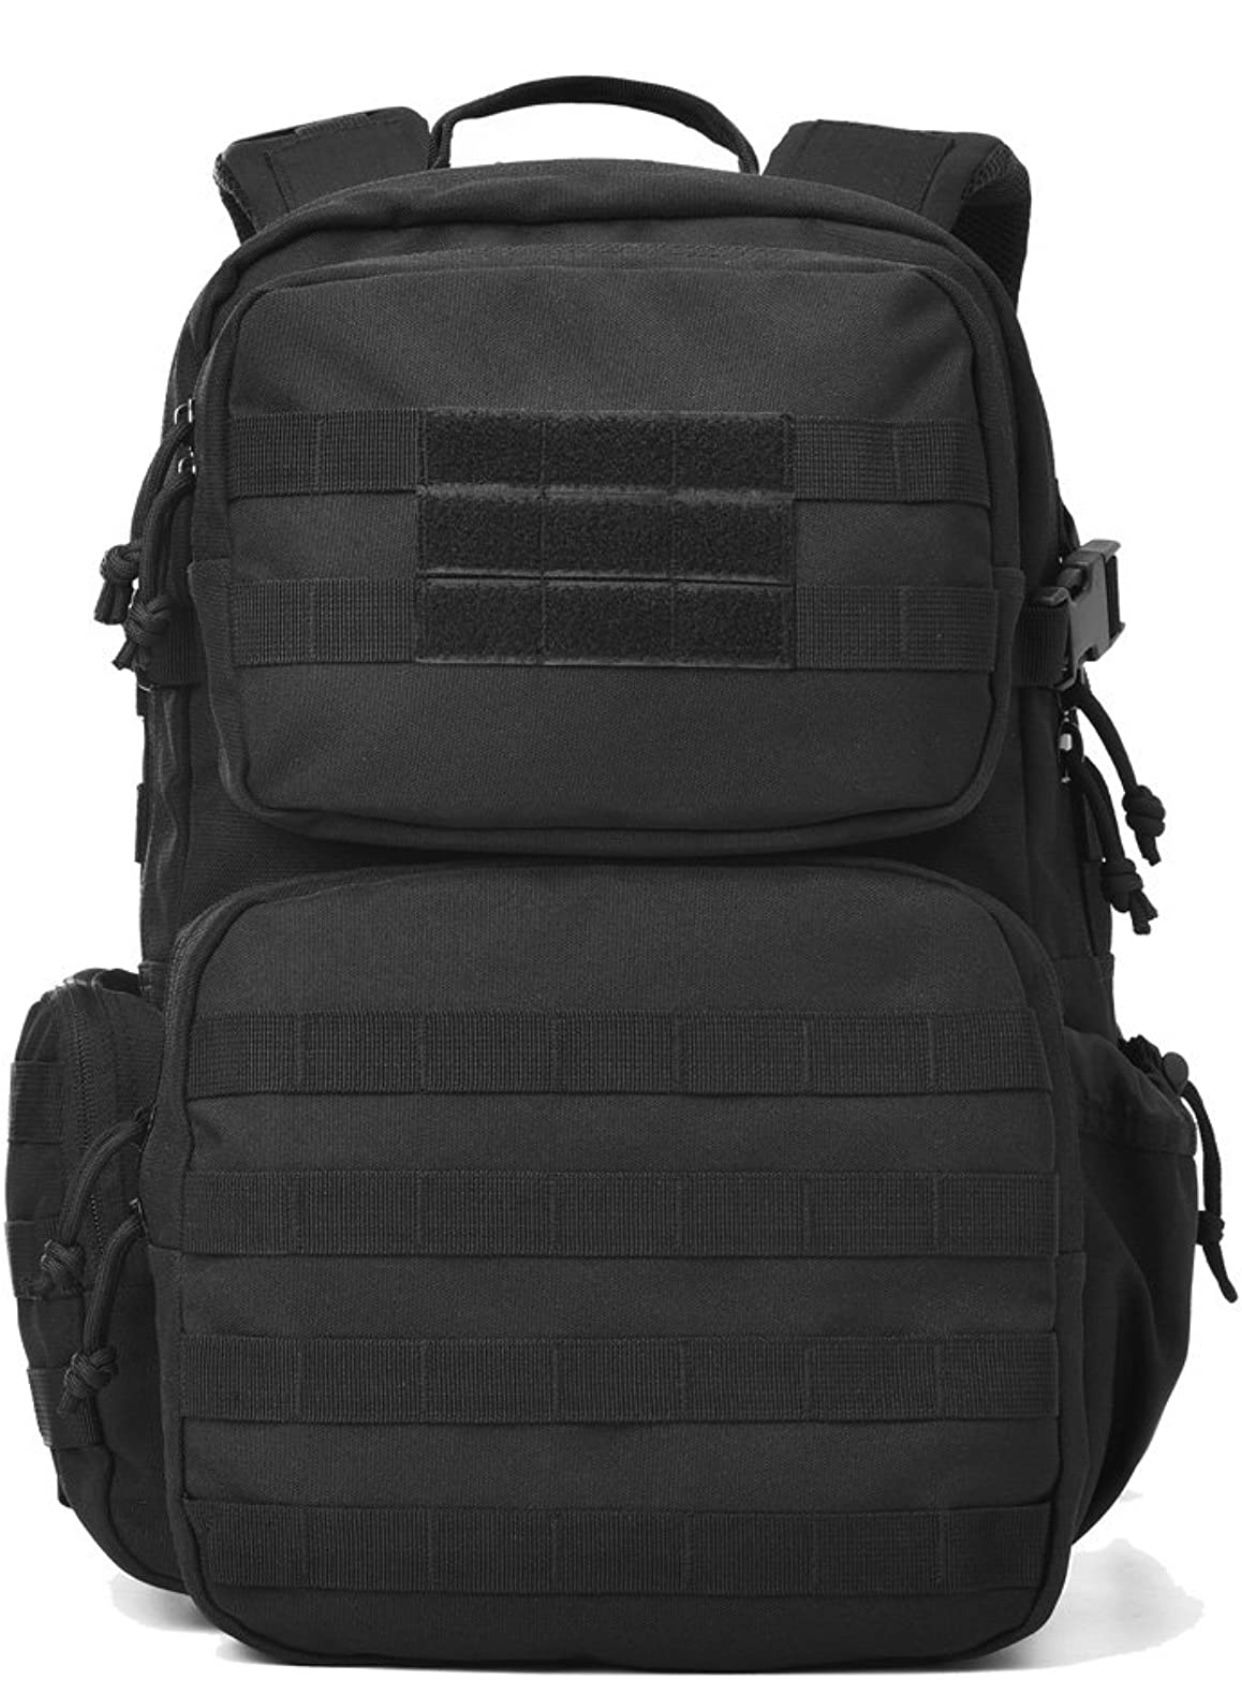 Backpack Army Assault Pack Molle Bug Bag Backpacks Rucksack for Outdoor Sport Travel Hiking Camping School Daypack Black 